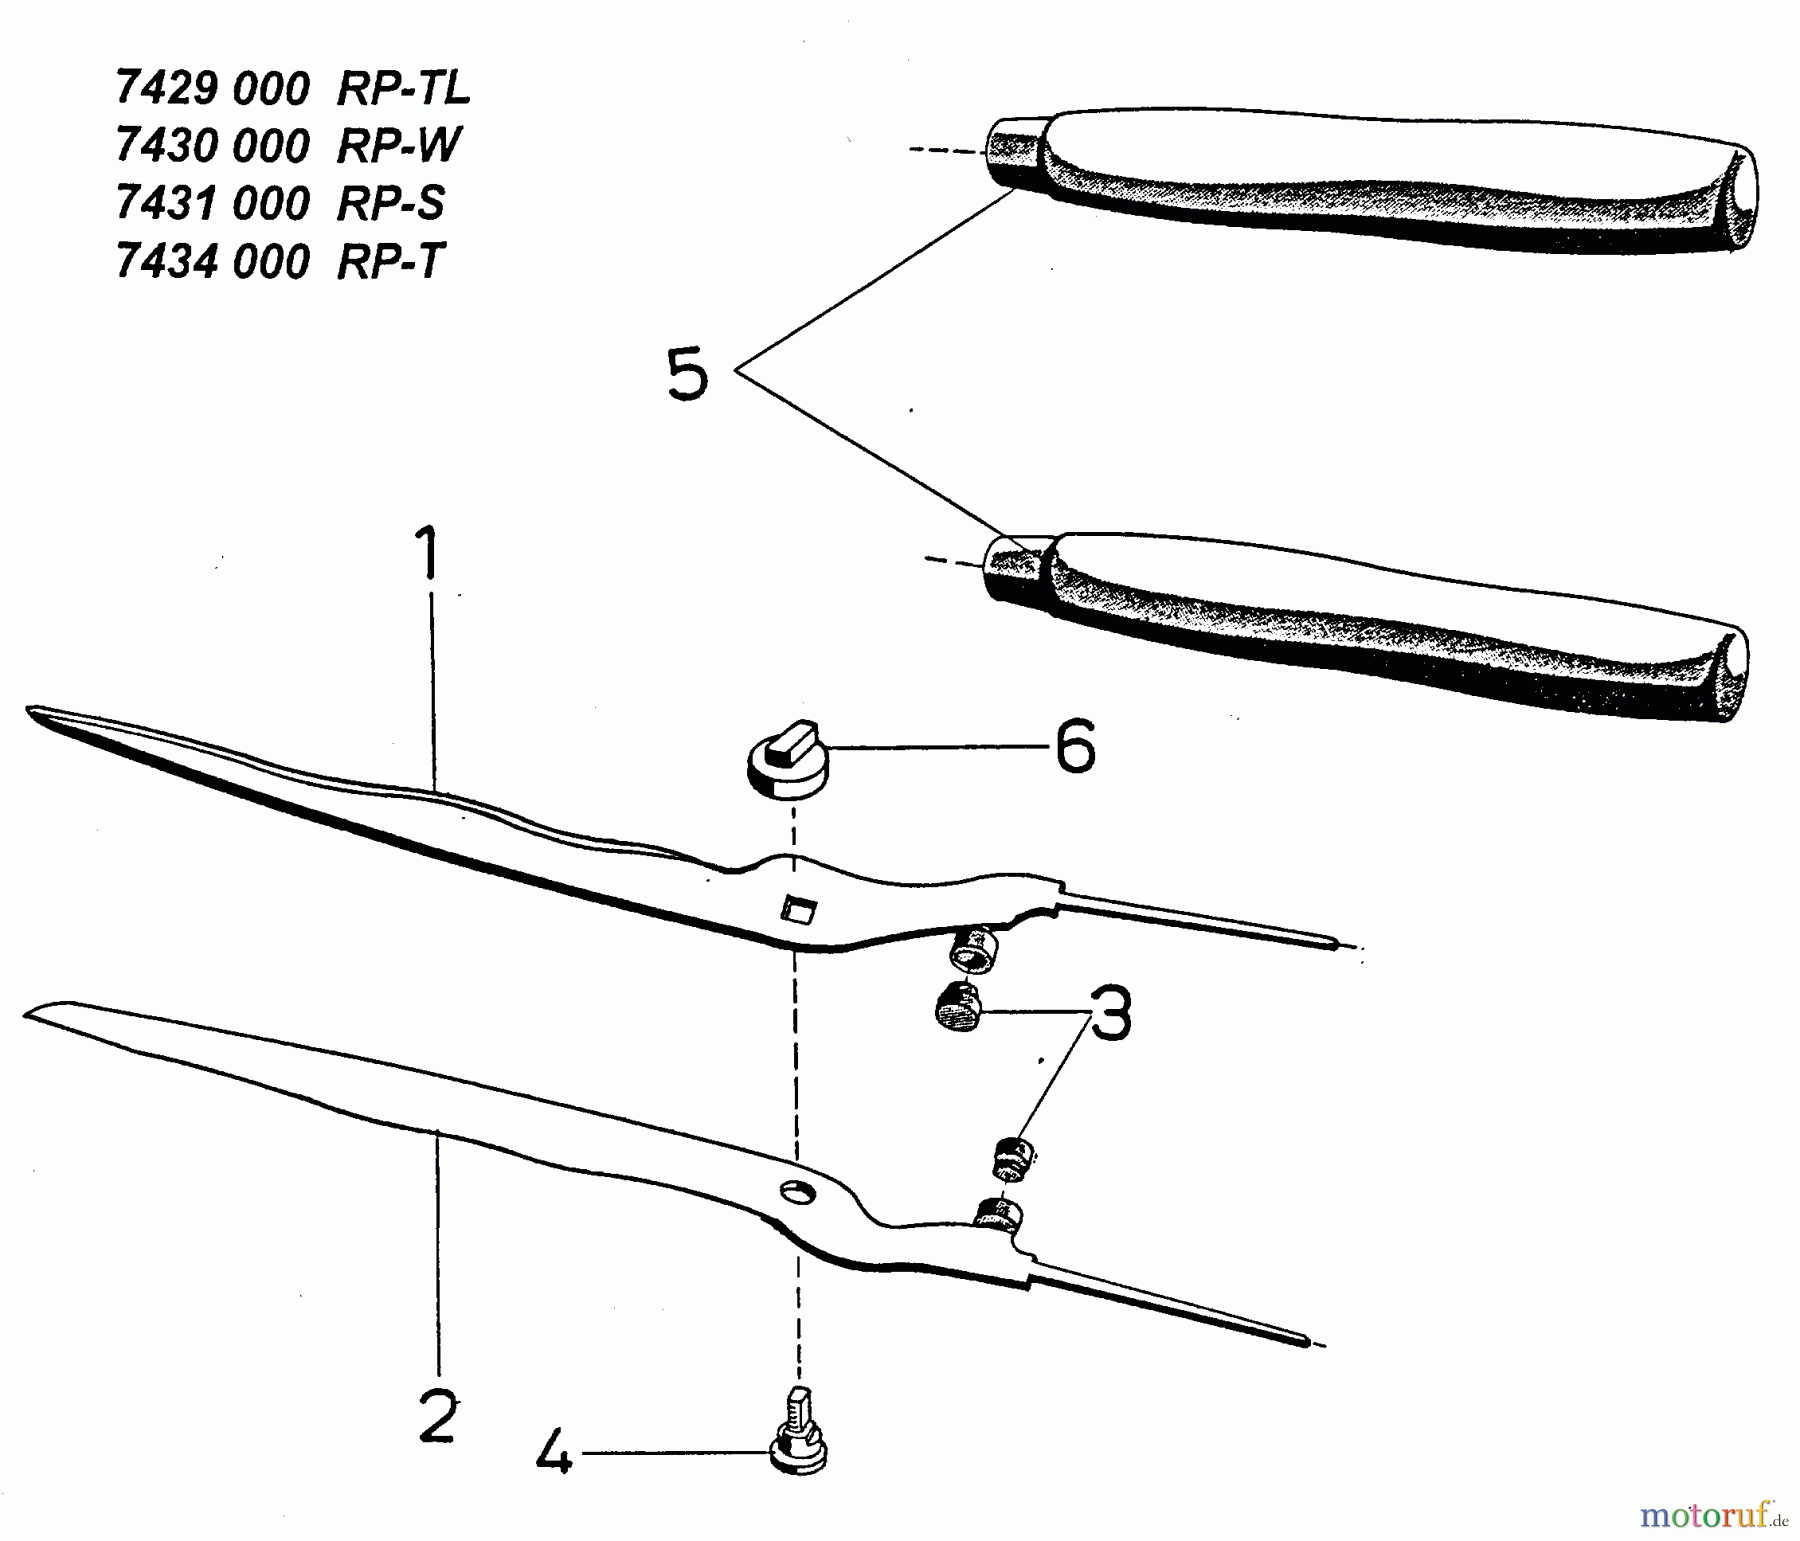  Wolf-Garten Hedge shears RP-T 7434000  (1998) Basic machine